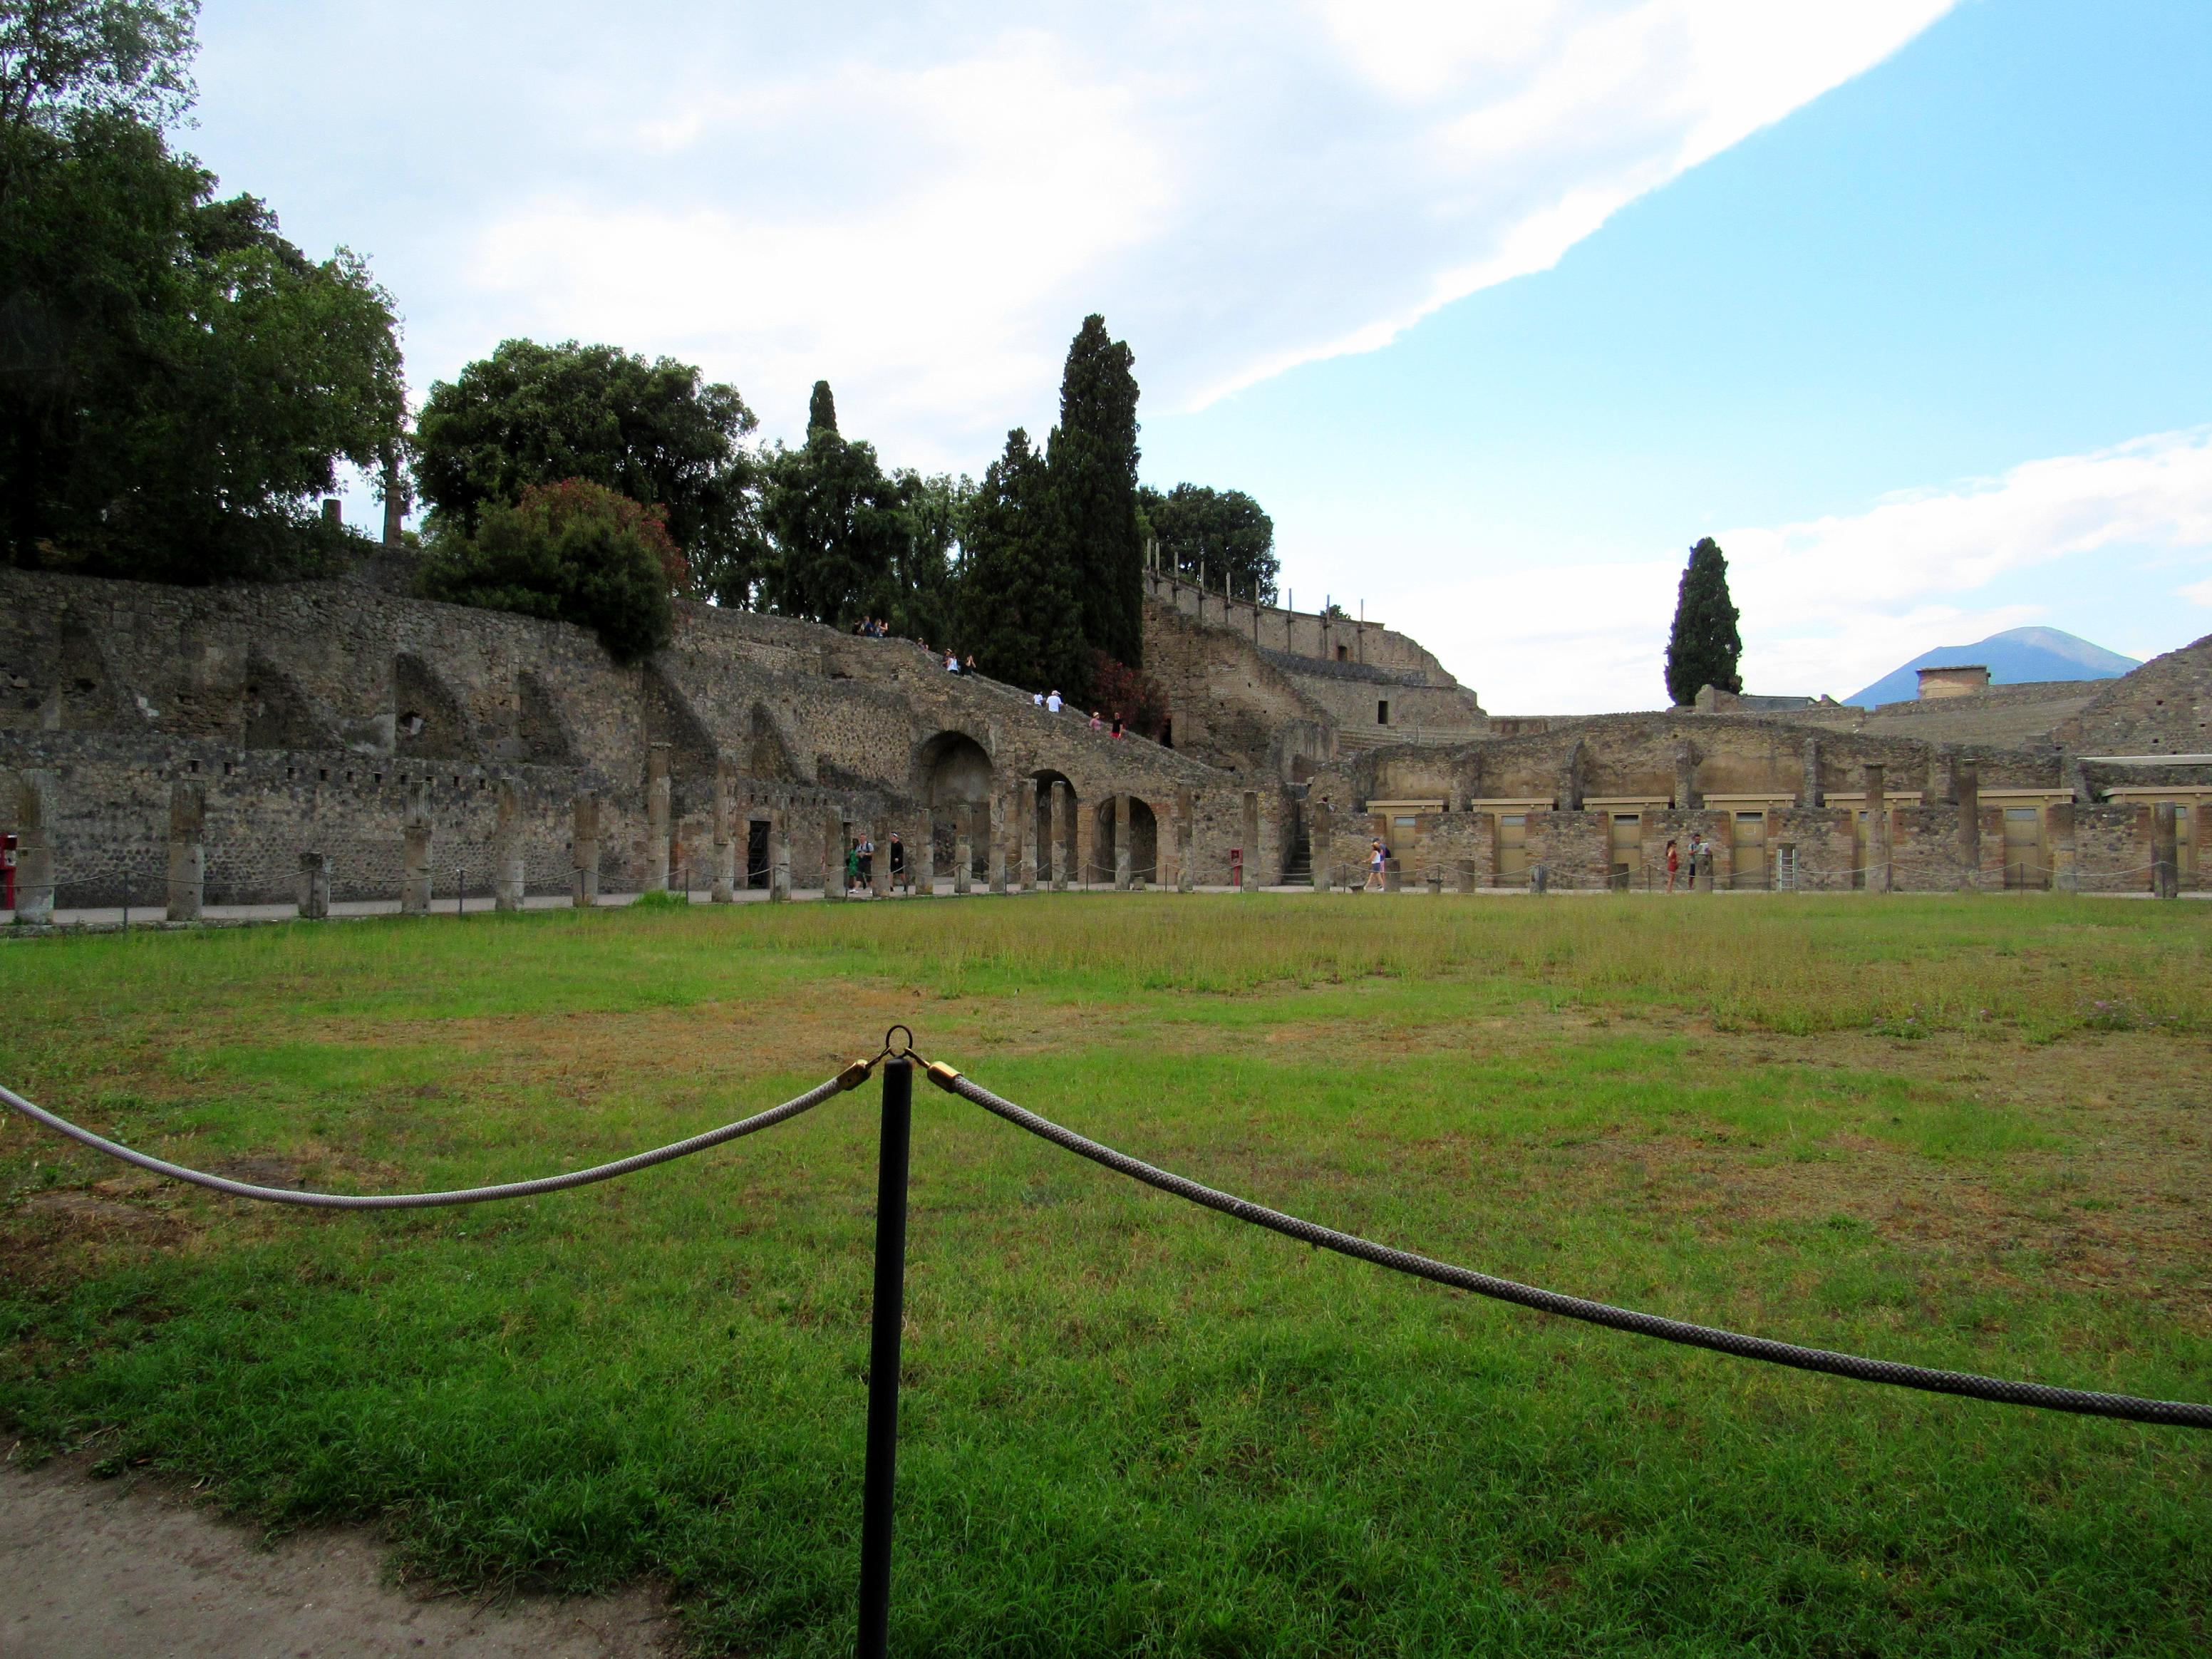 About Pompeii